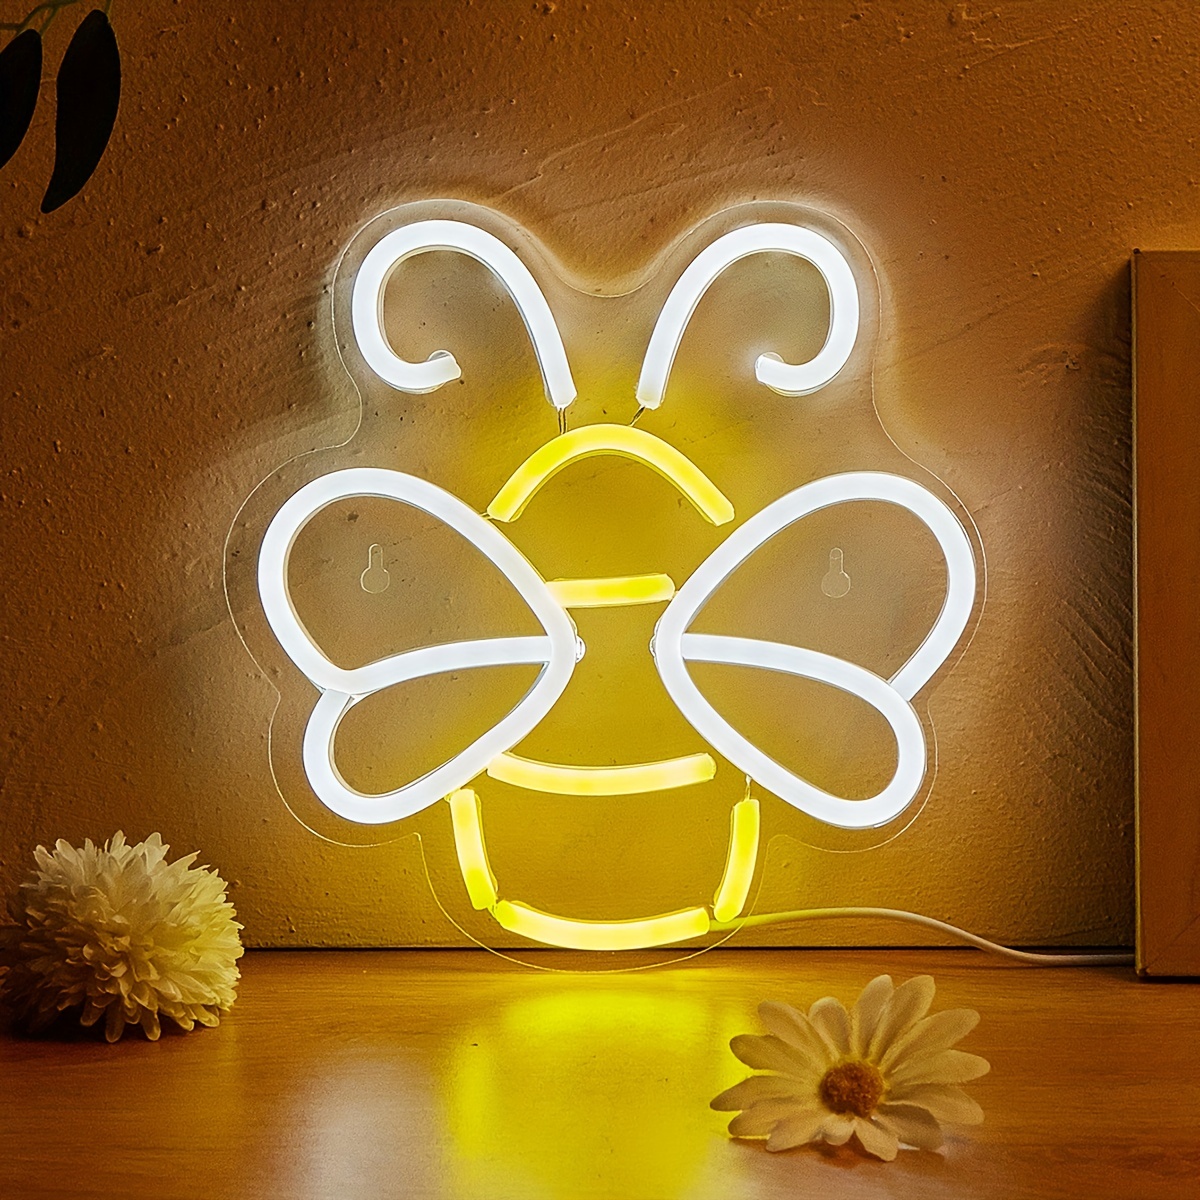 Coquimbo Bee Lights, 10Ft 30 Led Cute Battery Operated Bee String Ligh —  CHIMIYA